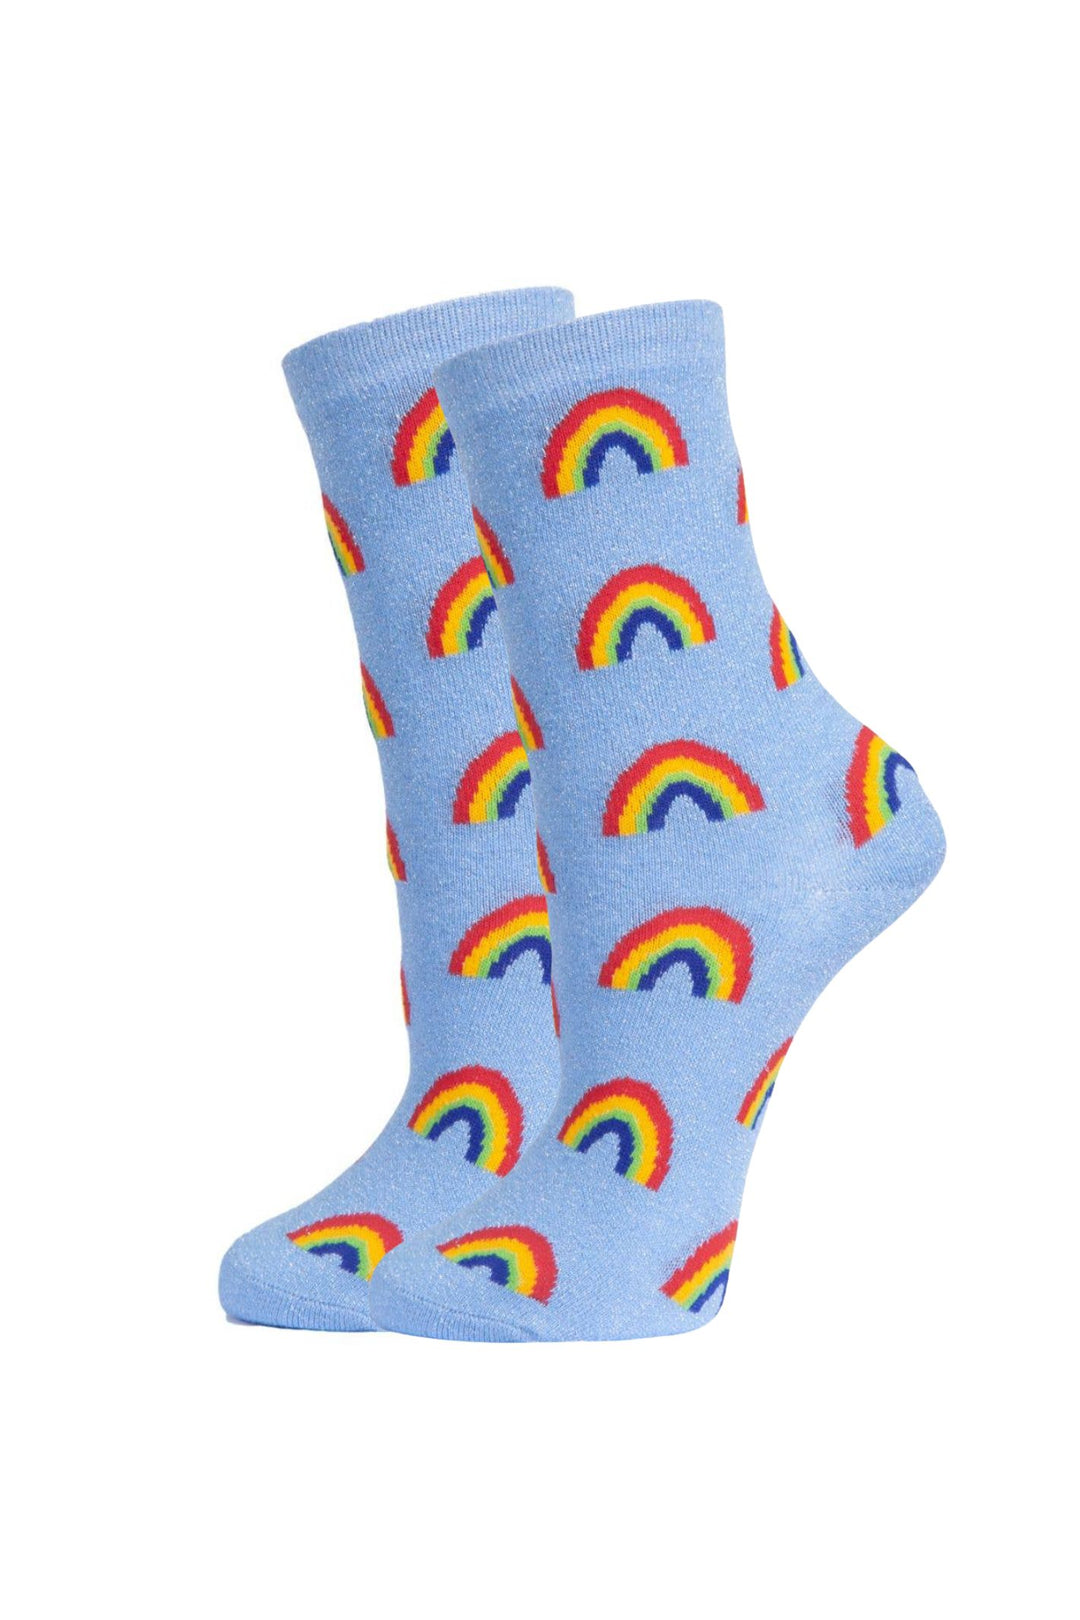 Blue Rainbow Glitter Cotton Ankle Socks